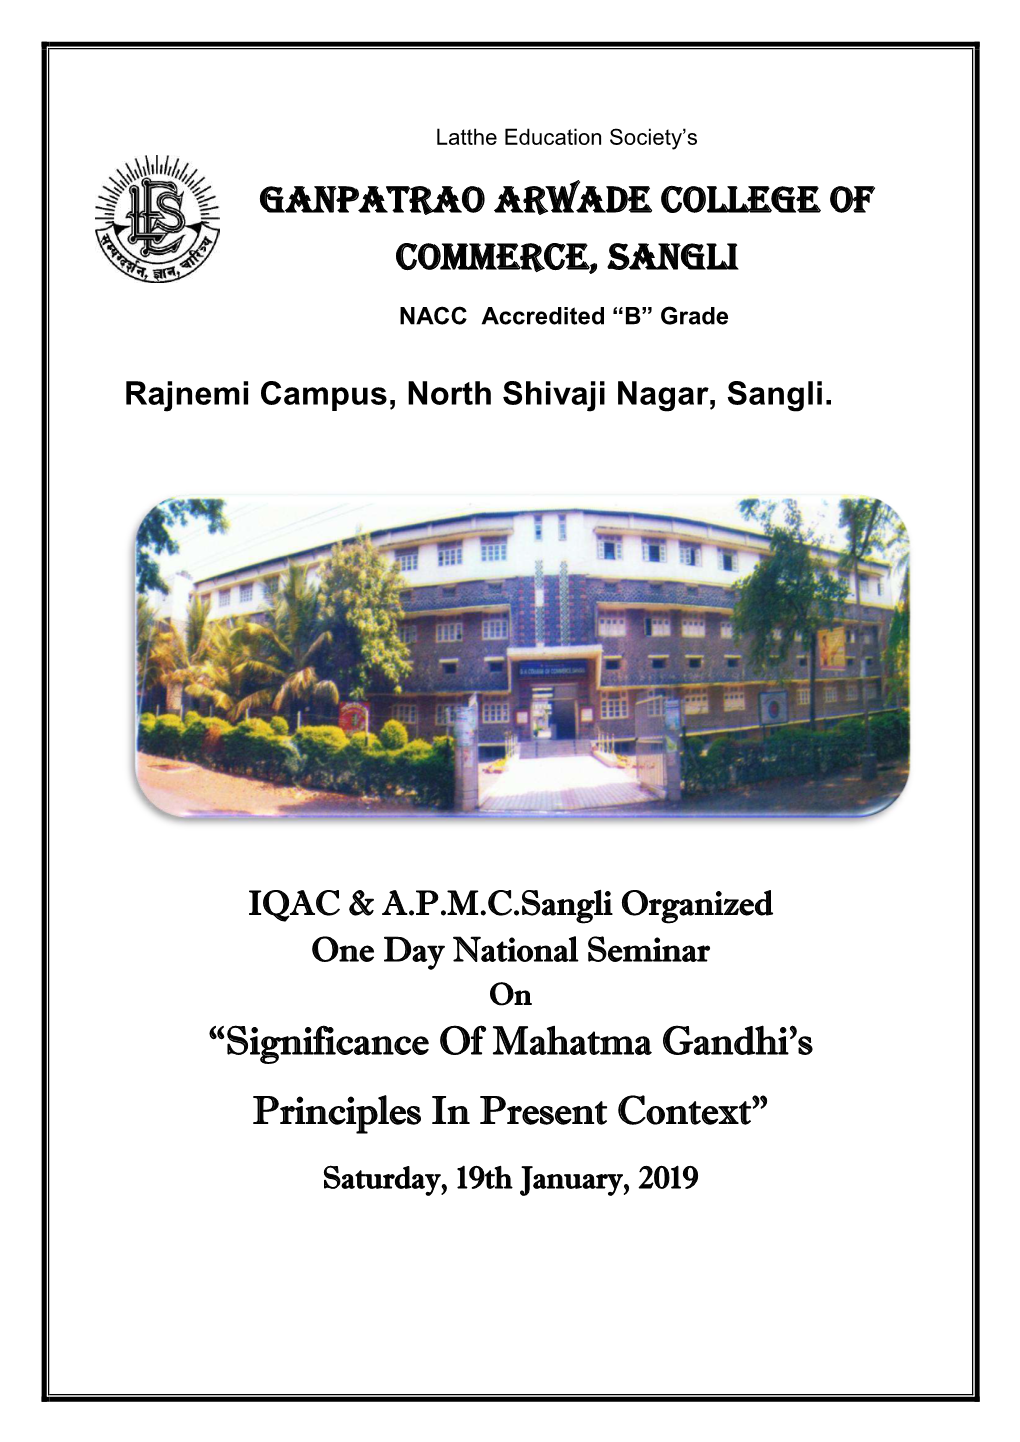 “Significance of Mahatma Gandhi's Principles in Present Context”